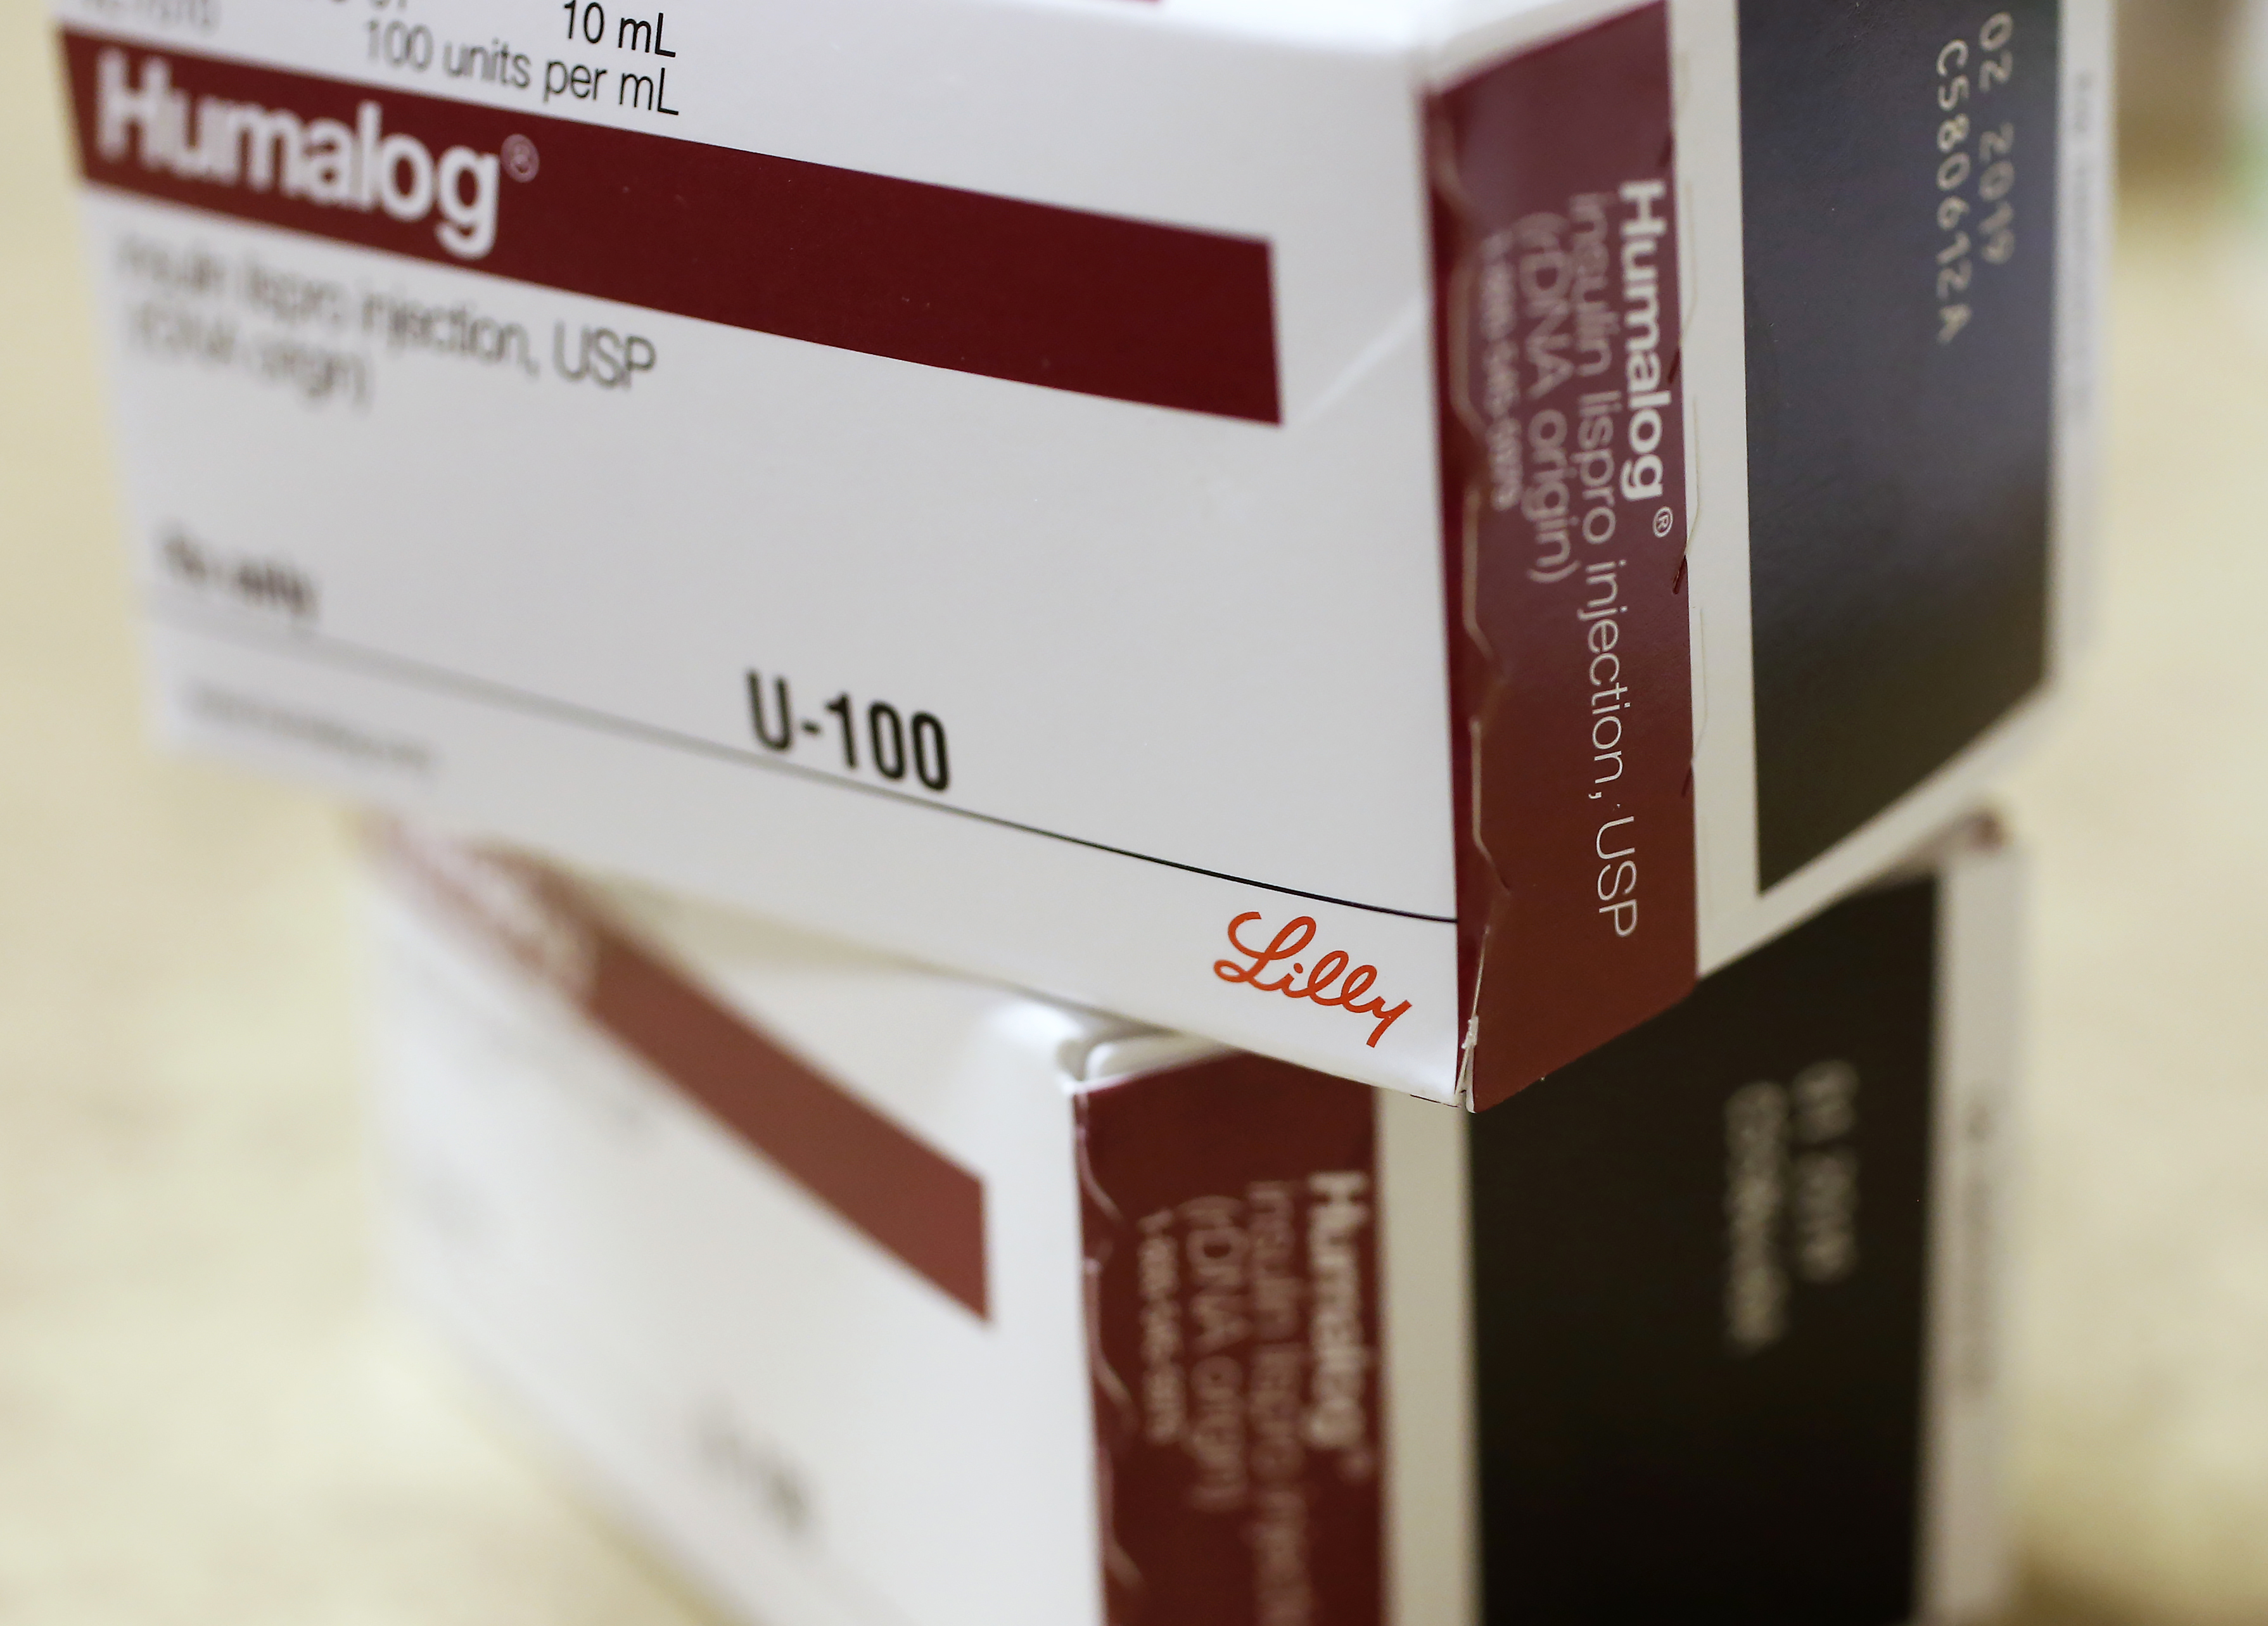 Diabetes medication Humalog faces shortage in Canada